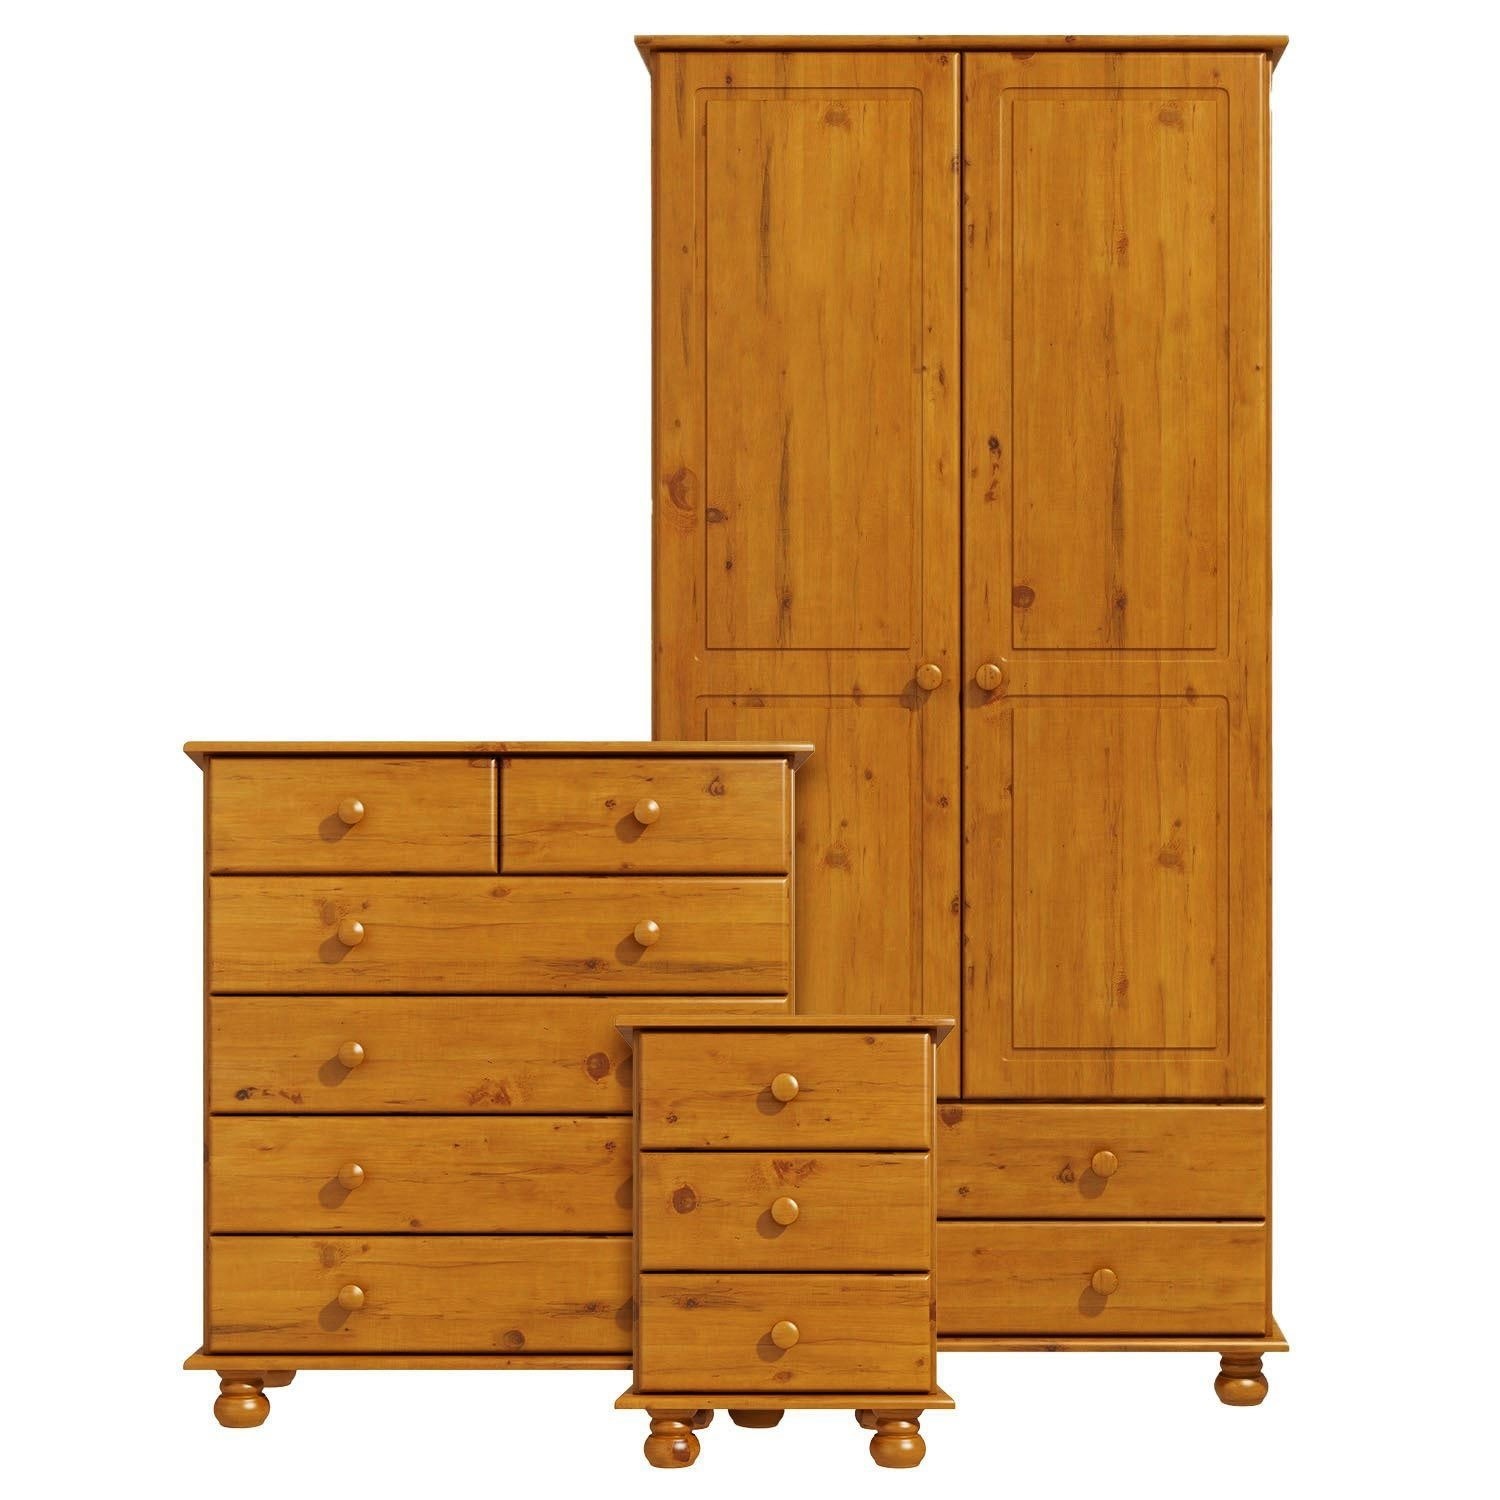 Photo of Pine 3 piece bedroom furniture set - hamilton